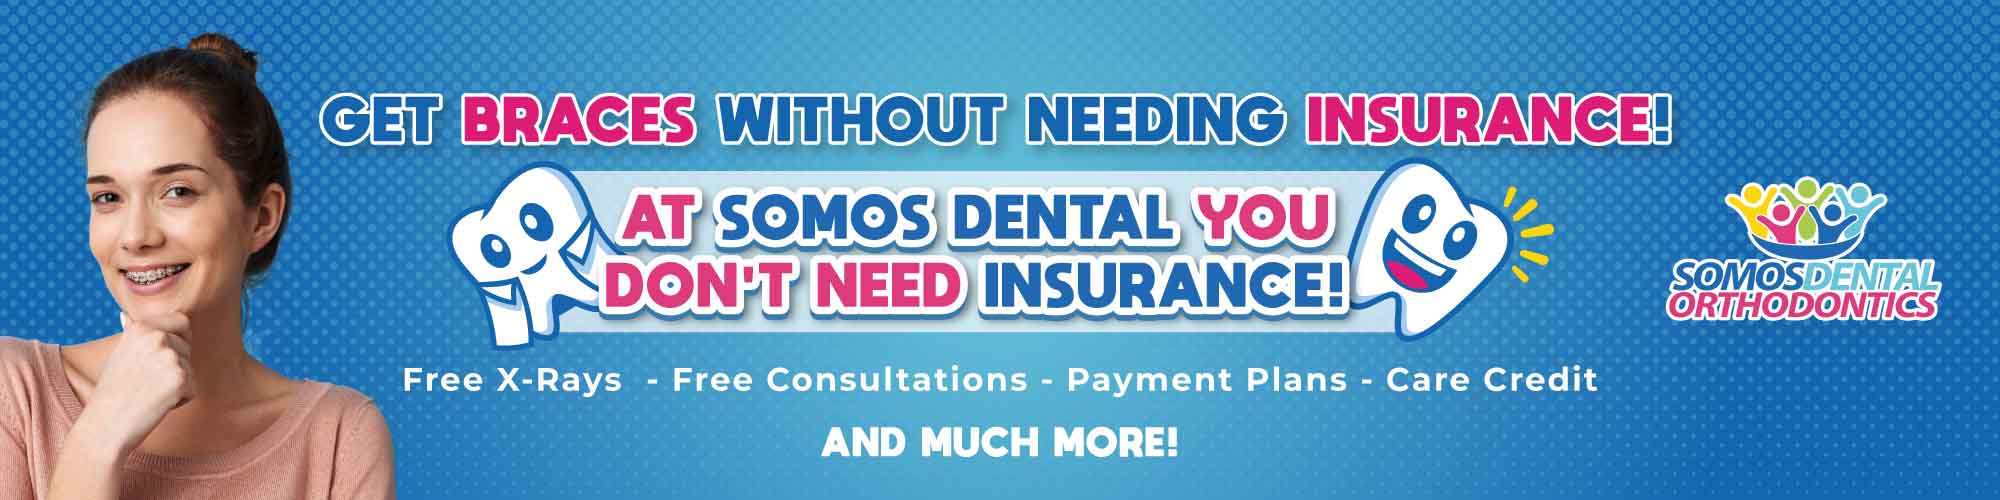 400014164-399230538-no-insurance-webbanner